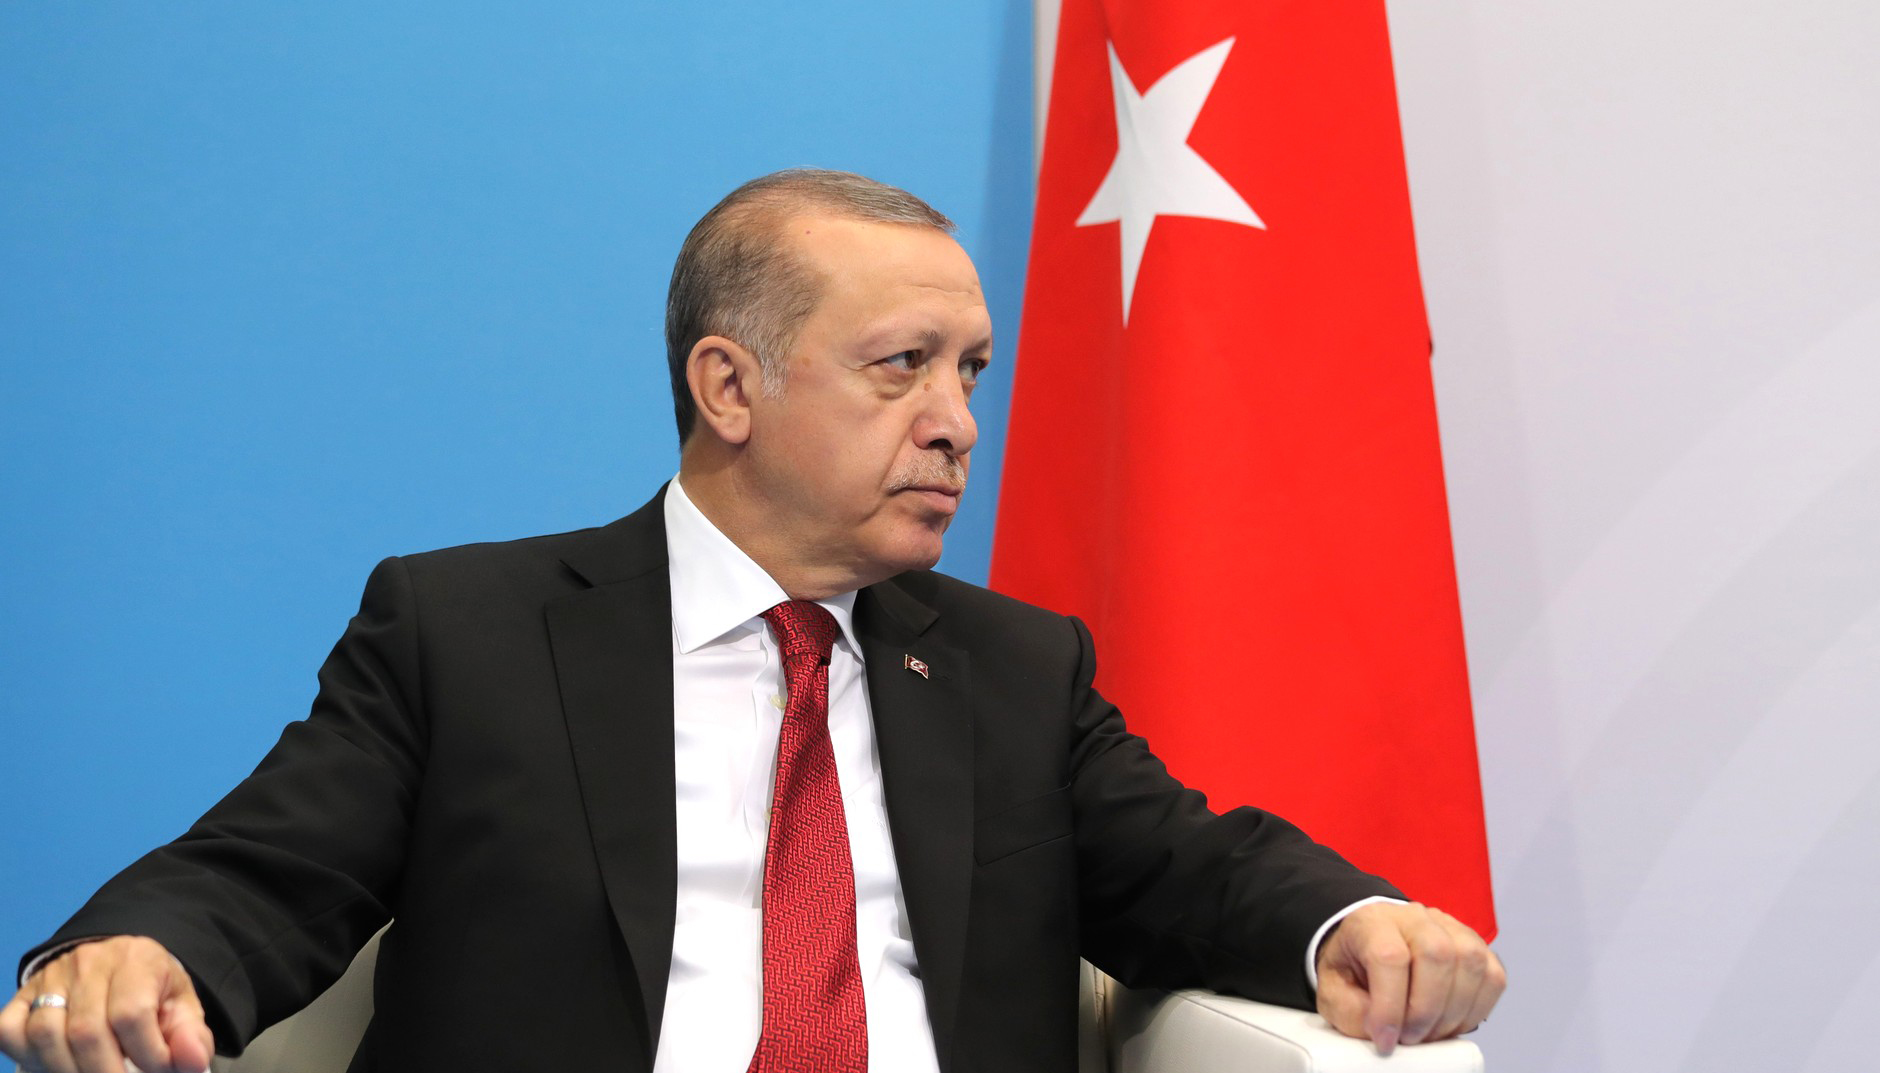 financialounge -  borse Borse europee mercati Piazza Affari Recep Tayyip Erdogan turchia